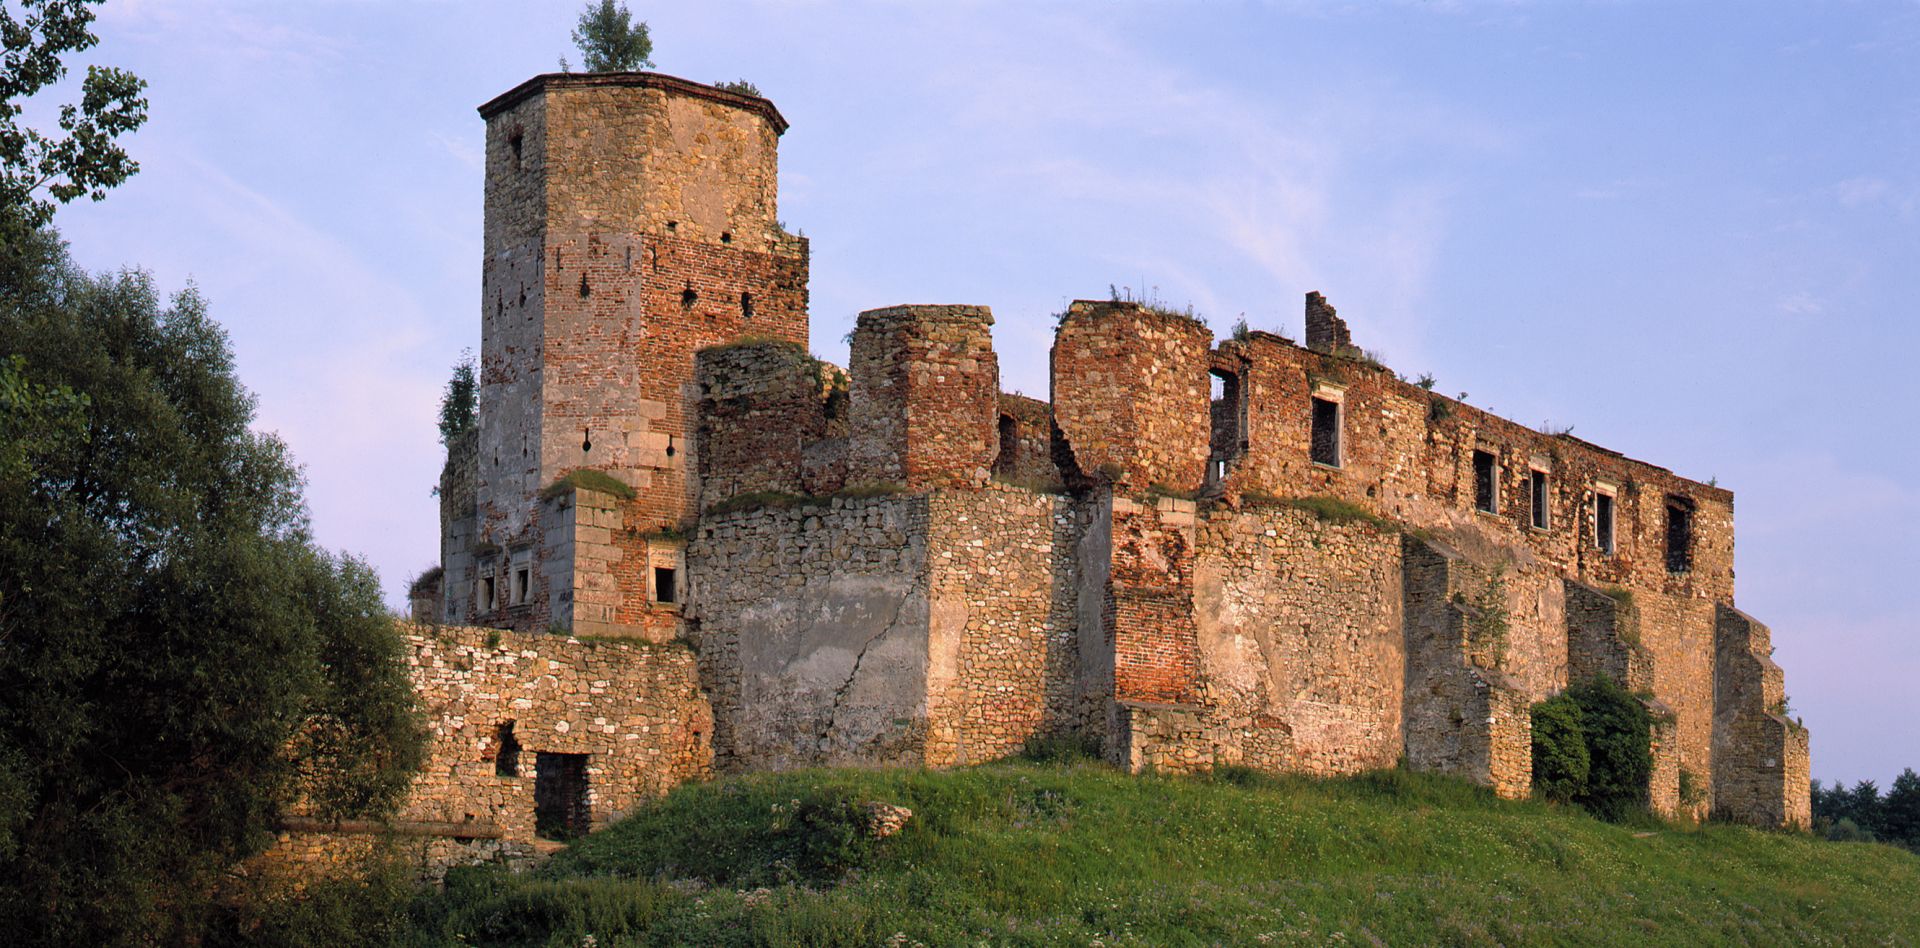 Castle of Krakow Bishops